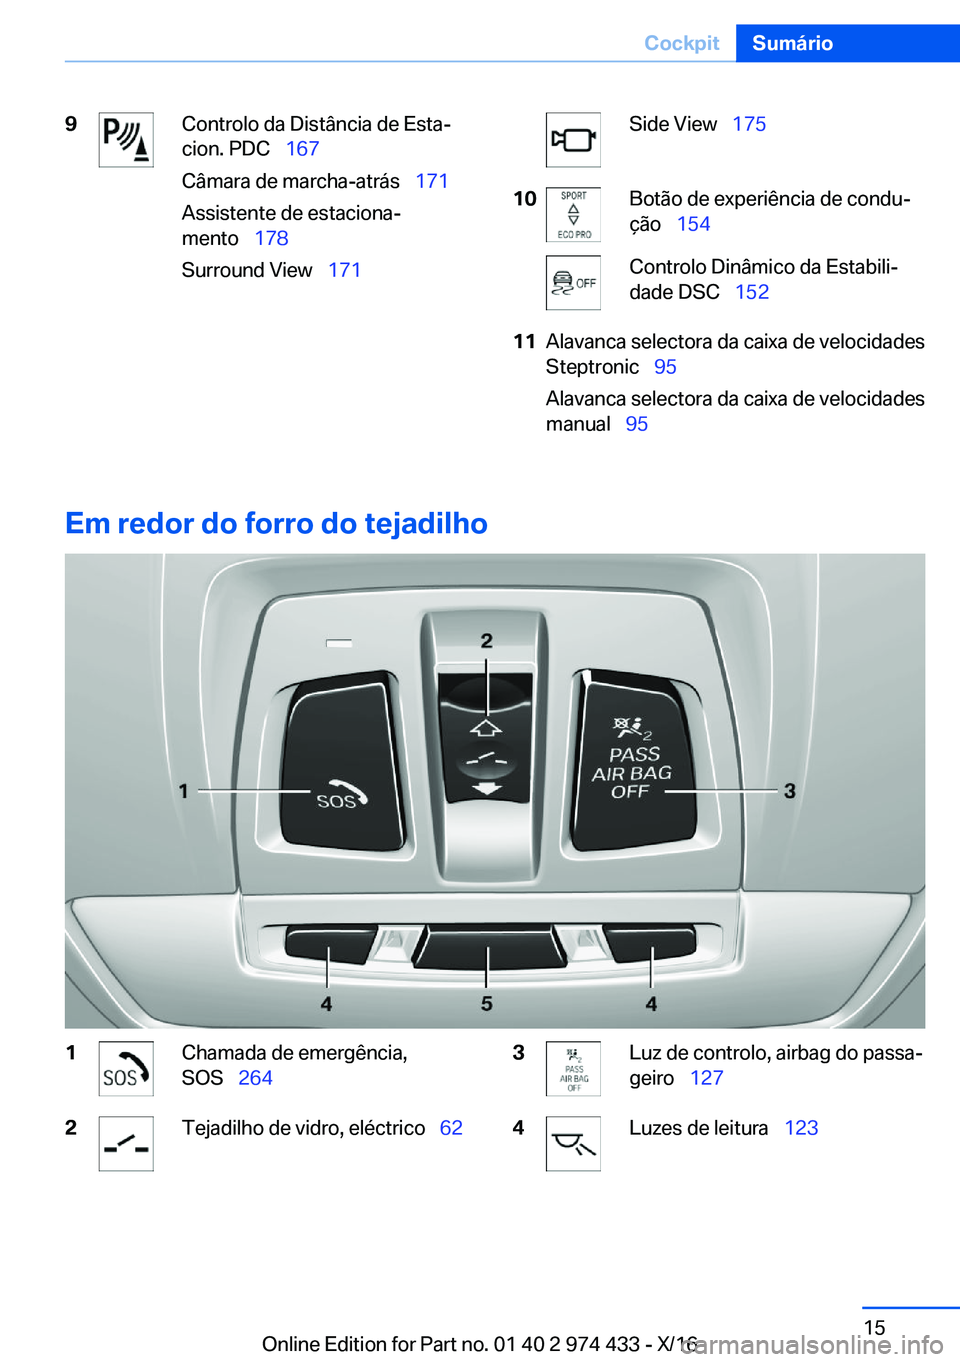 BMW 4 SERIES GRAN COUPE 2017  Manual do condutor (in Portuguese) �9�C�o�n�t�r�o�l�o� �d�a� �D�i�s�t�â�n�c�i�a� �d�e� �E�s�t�aª
�c�i�o�n�.� �P�D�C\_ �1�6�7
�C�â�m�a�r�a� �d�e� �m�a�r�c�h�a�-�a�t�r�á�s\_ �1�7�1
�A�s�s�i�s�t�e�n�t�e� �d�e� �e�s�t�a�c�i�o�n�a